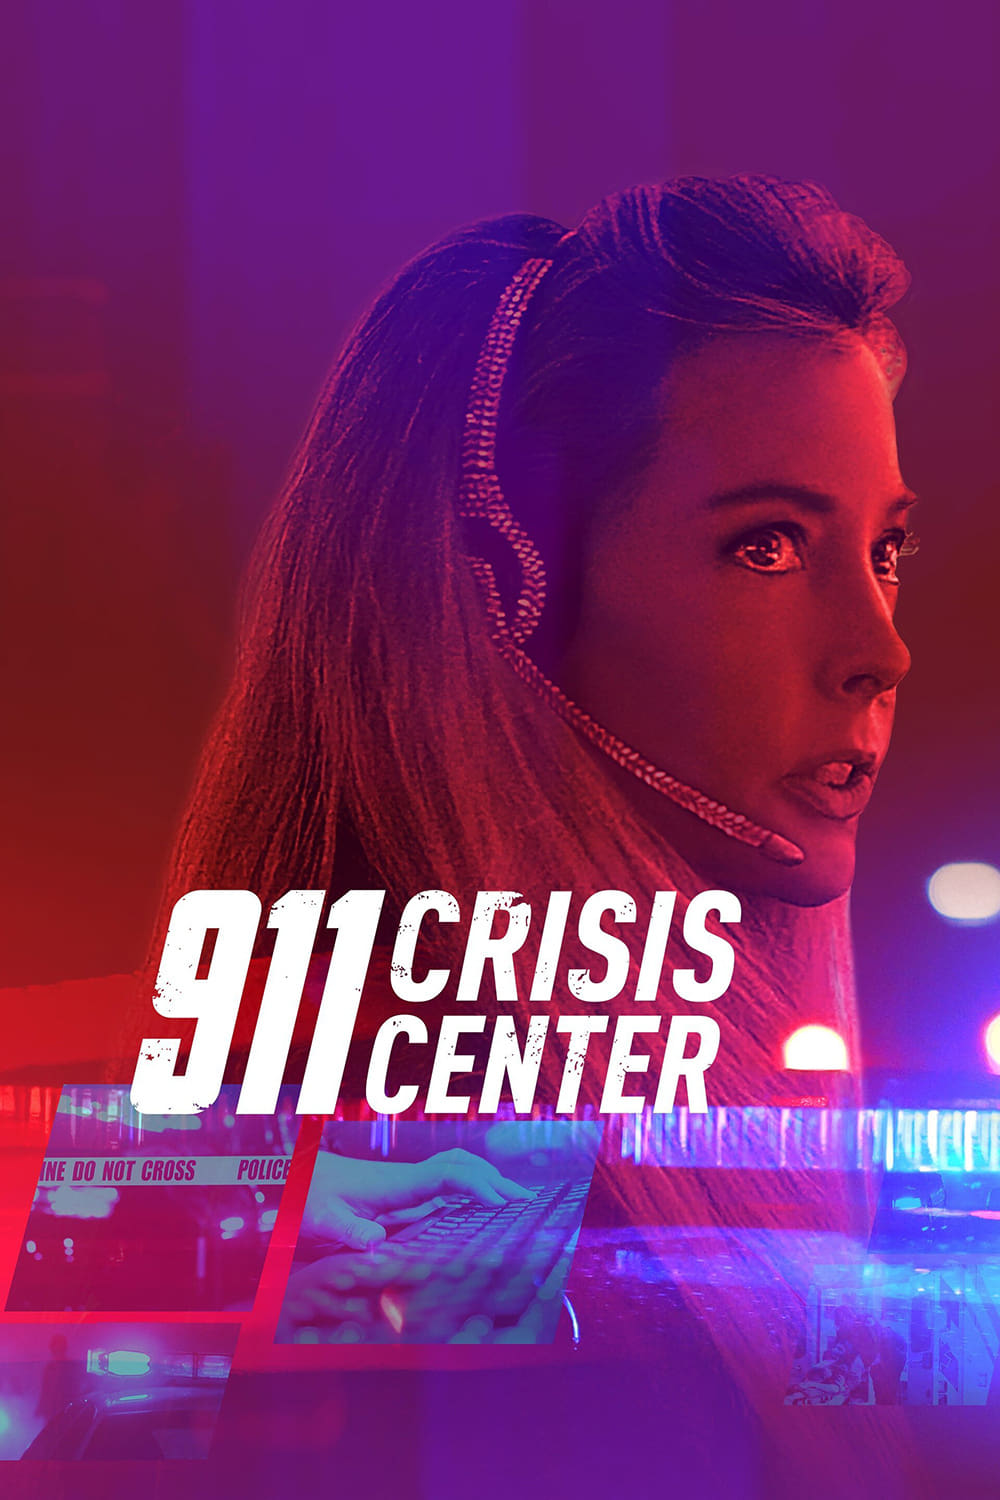 911 Crisis Center TV Shows About Domestic Violence